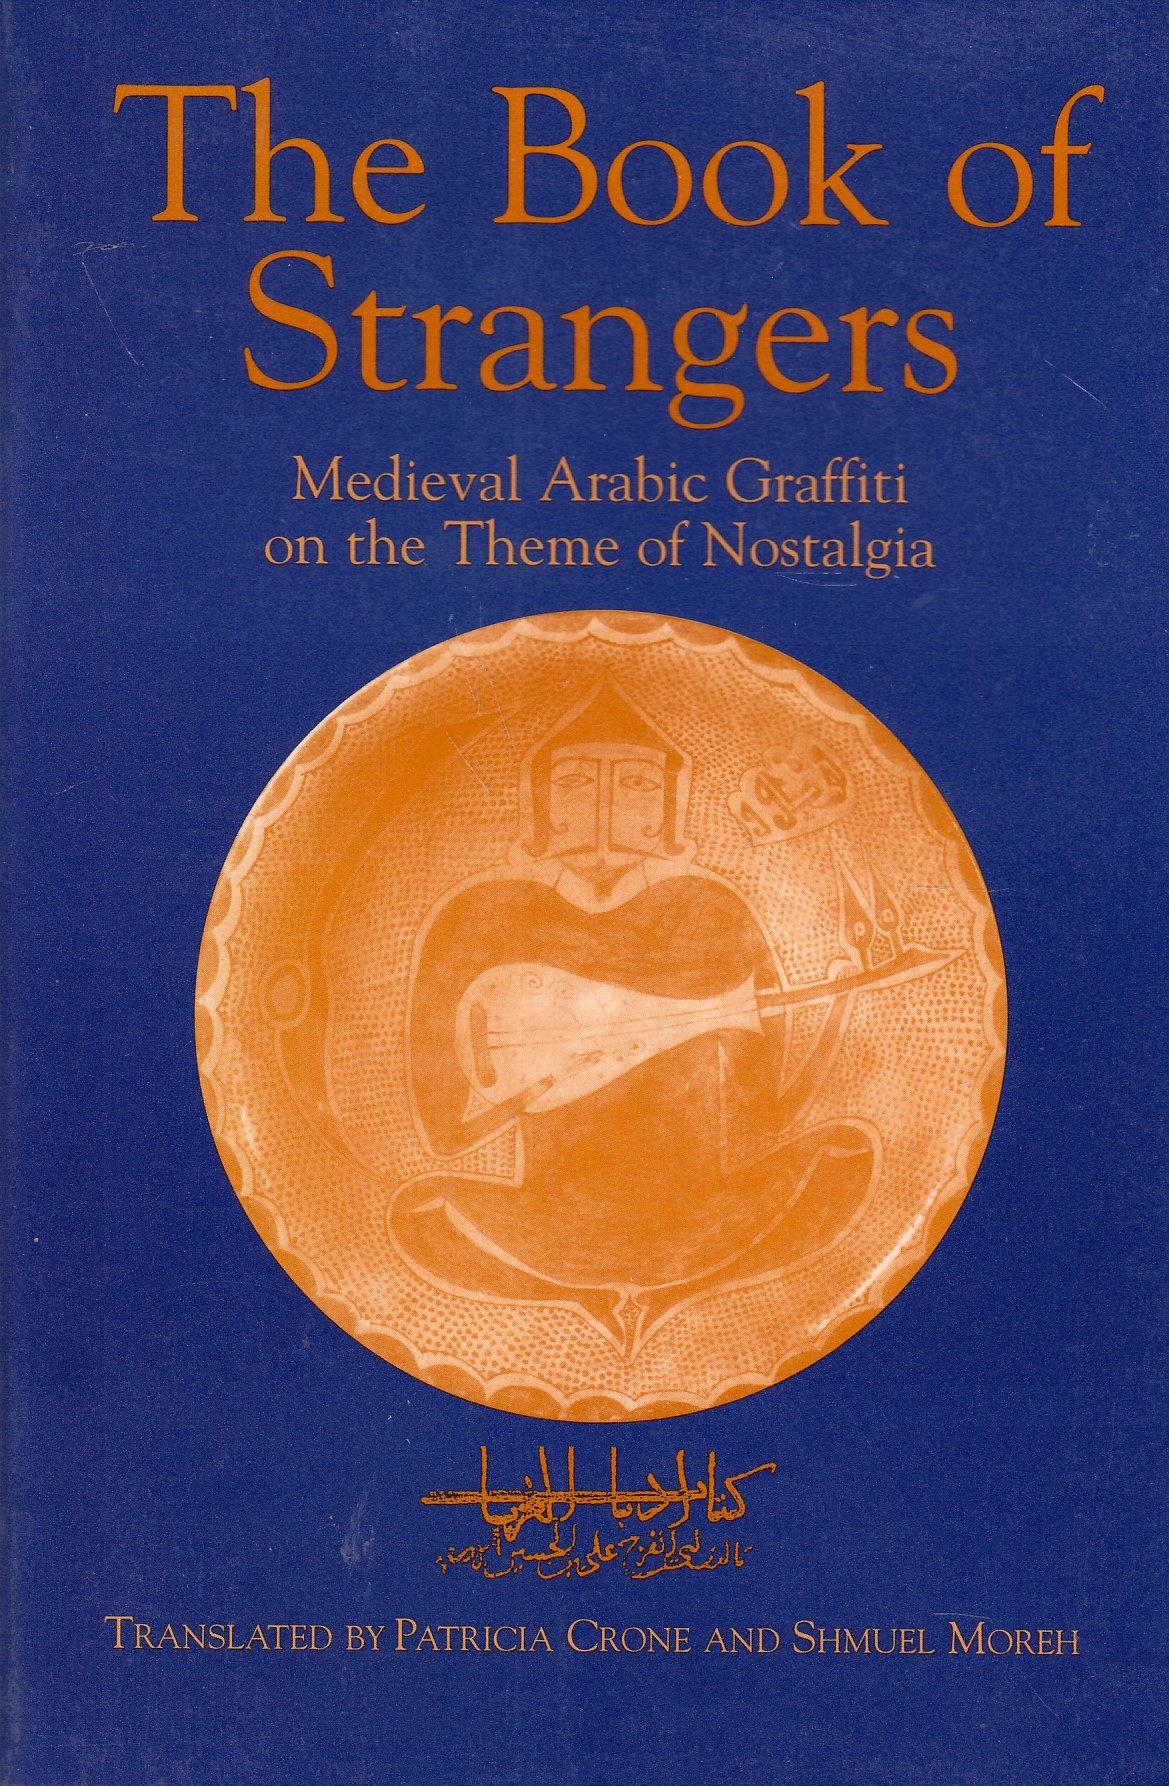 The Book of Strangers: mediaeval Arabic graffiti on the theme of nostalgia.